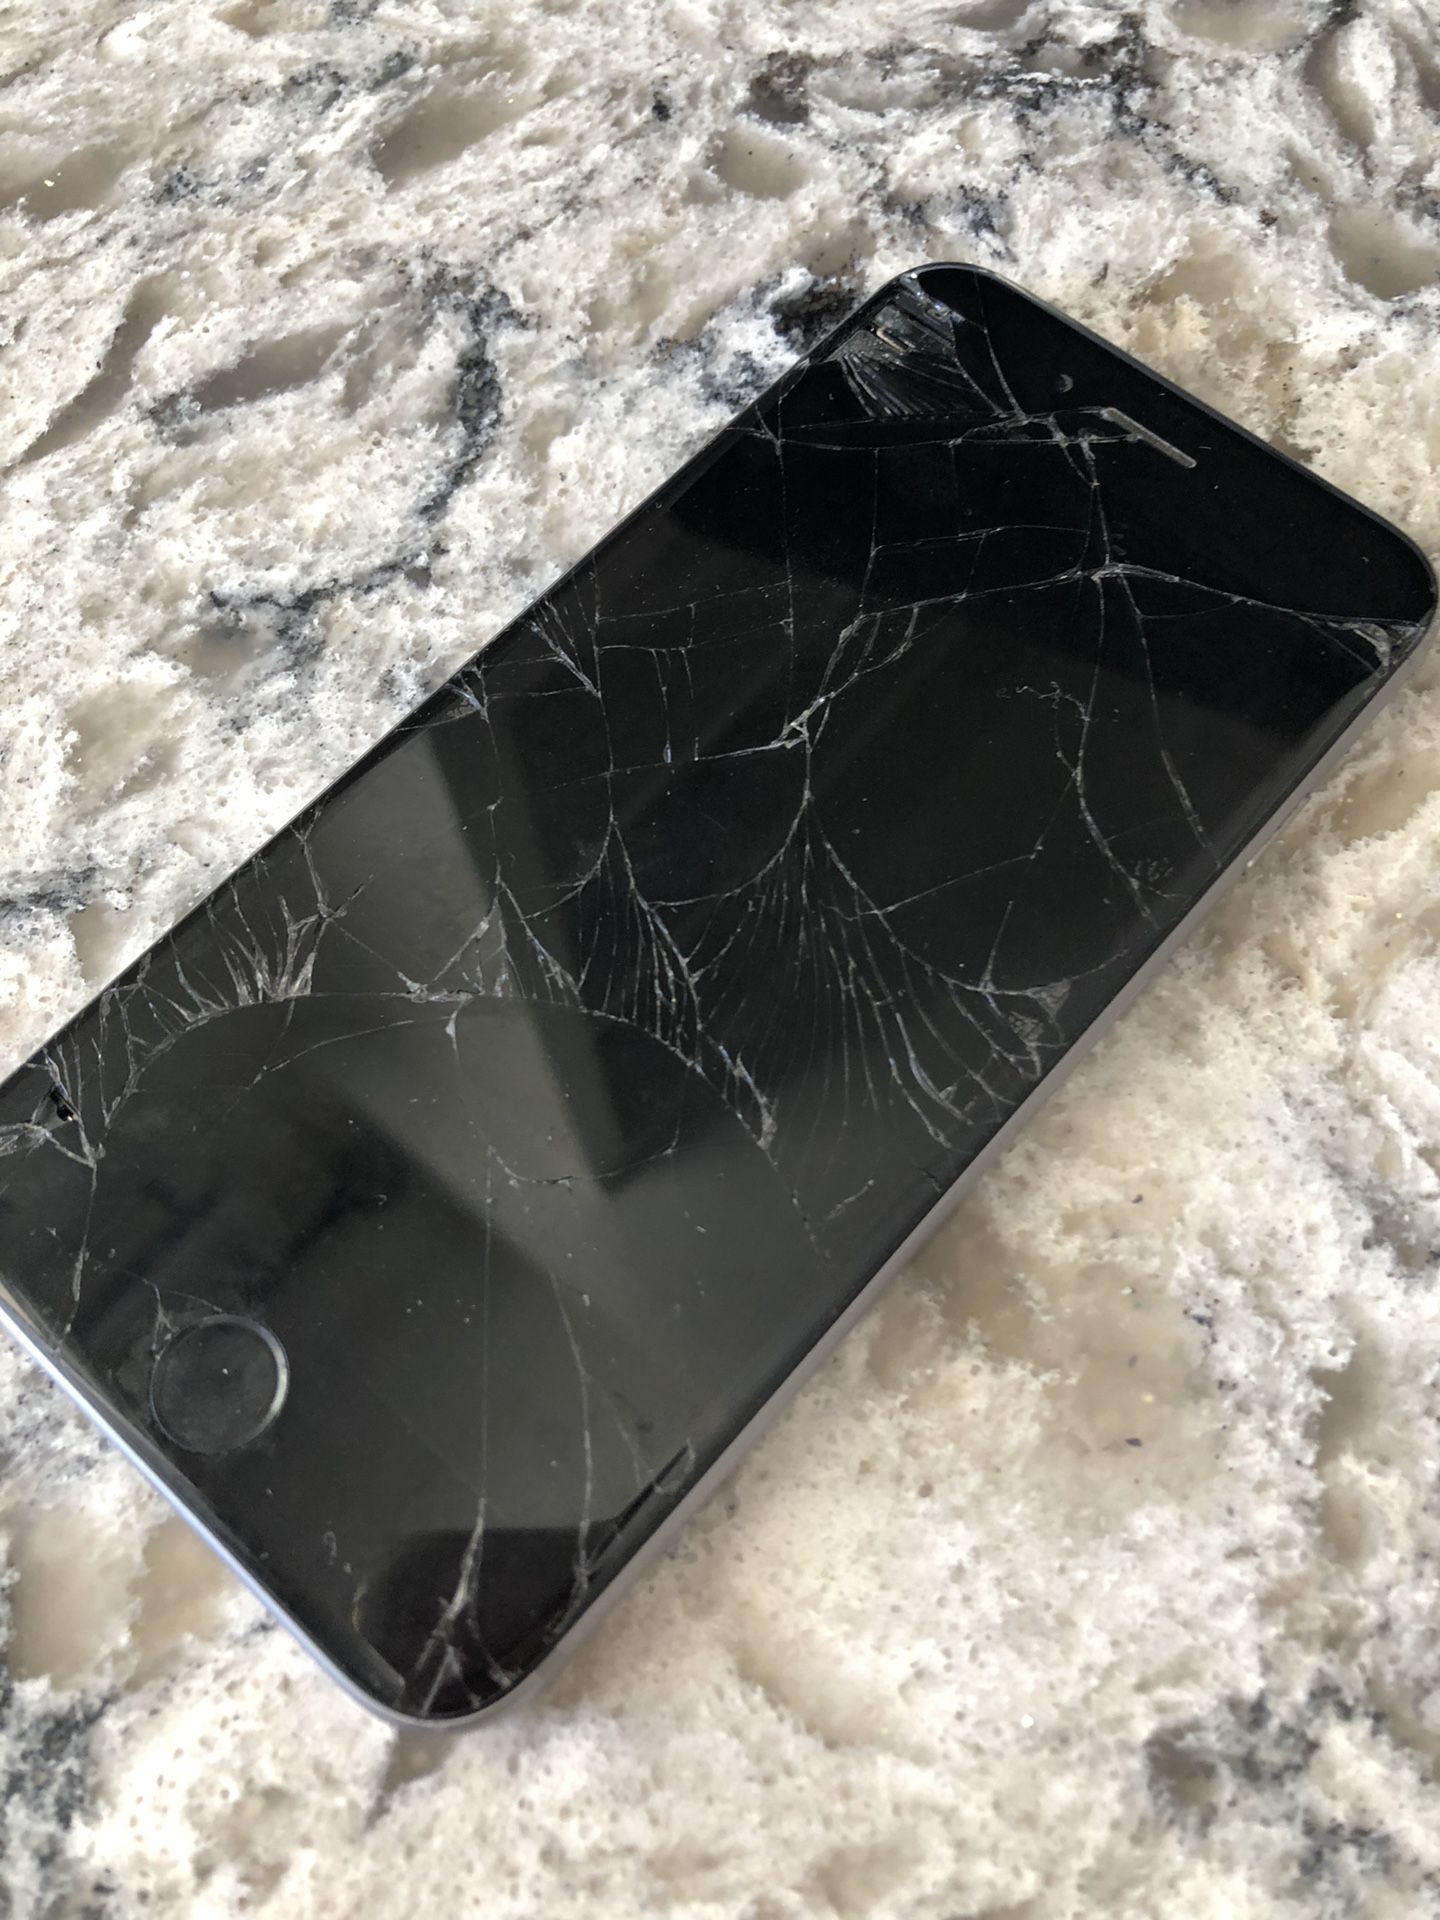 iPhone 6, broken but turns on